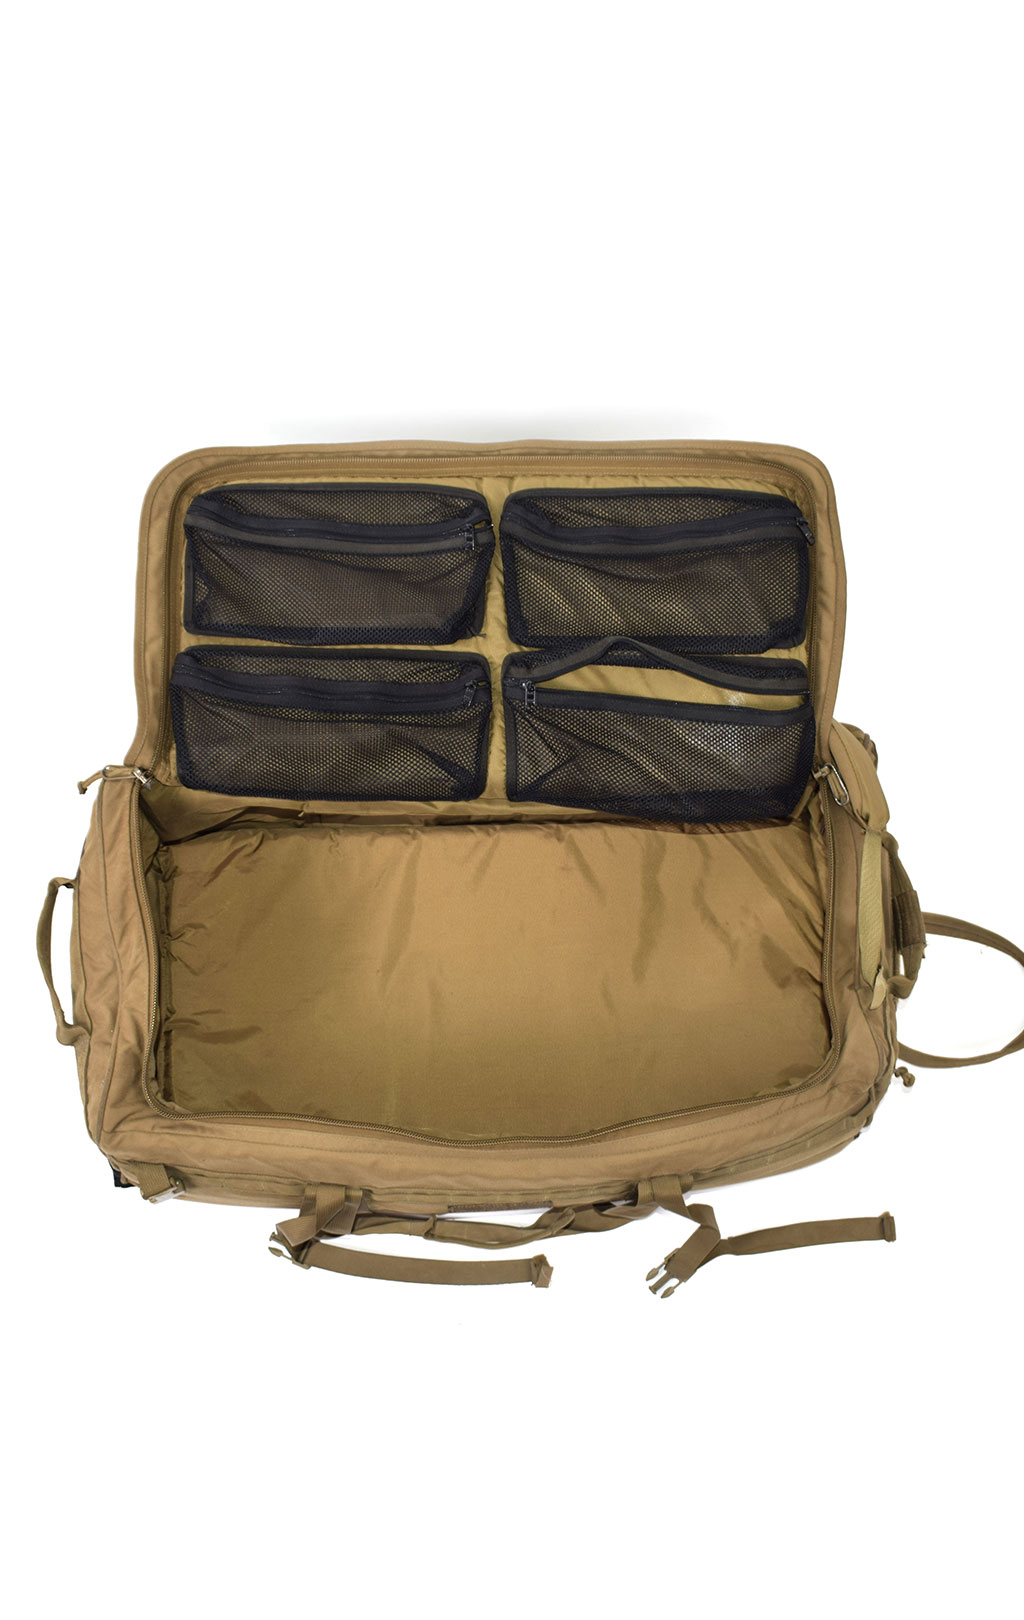 Сумка вещевая-рюкзак на колёсах USMC 70x35x30 coyote б/у США